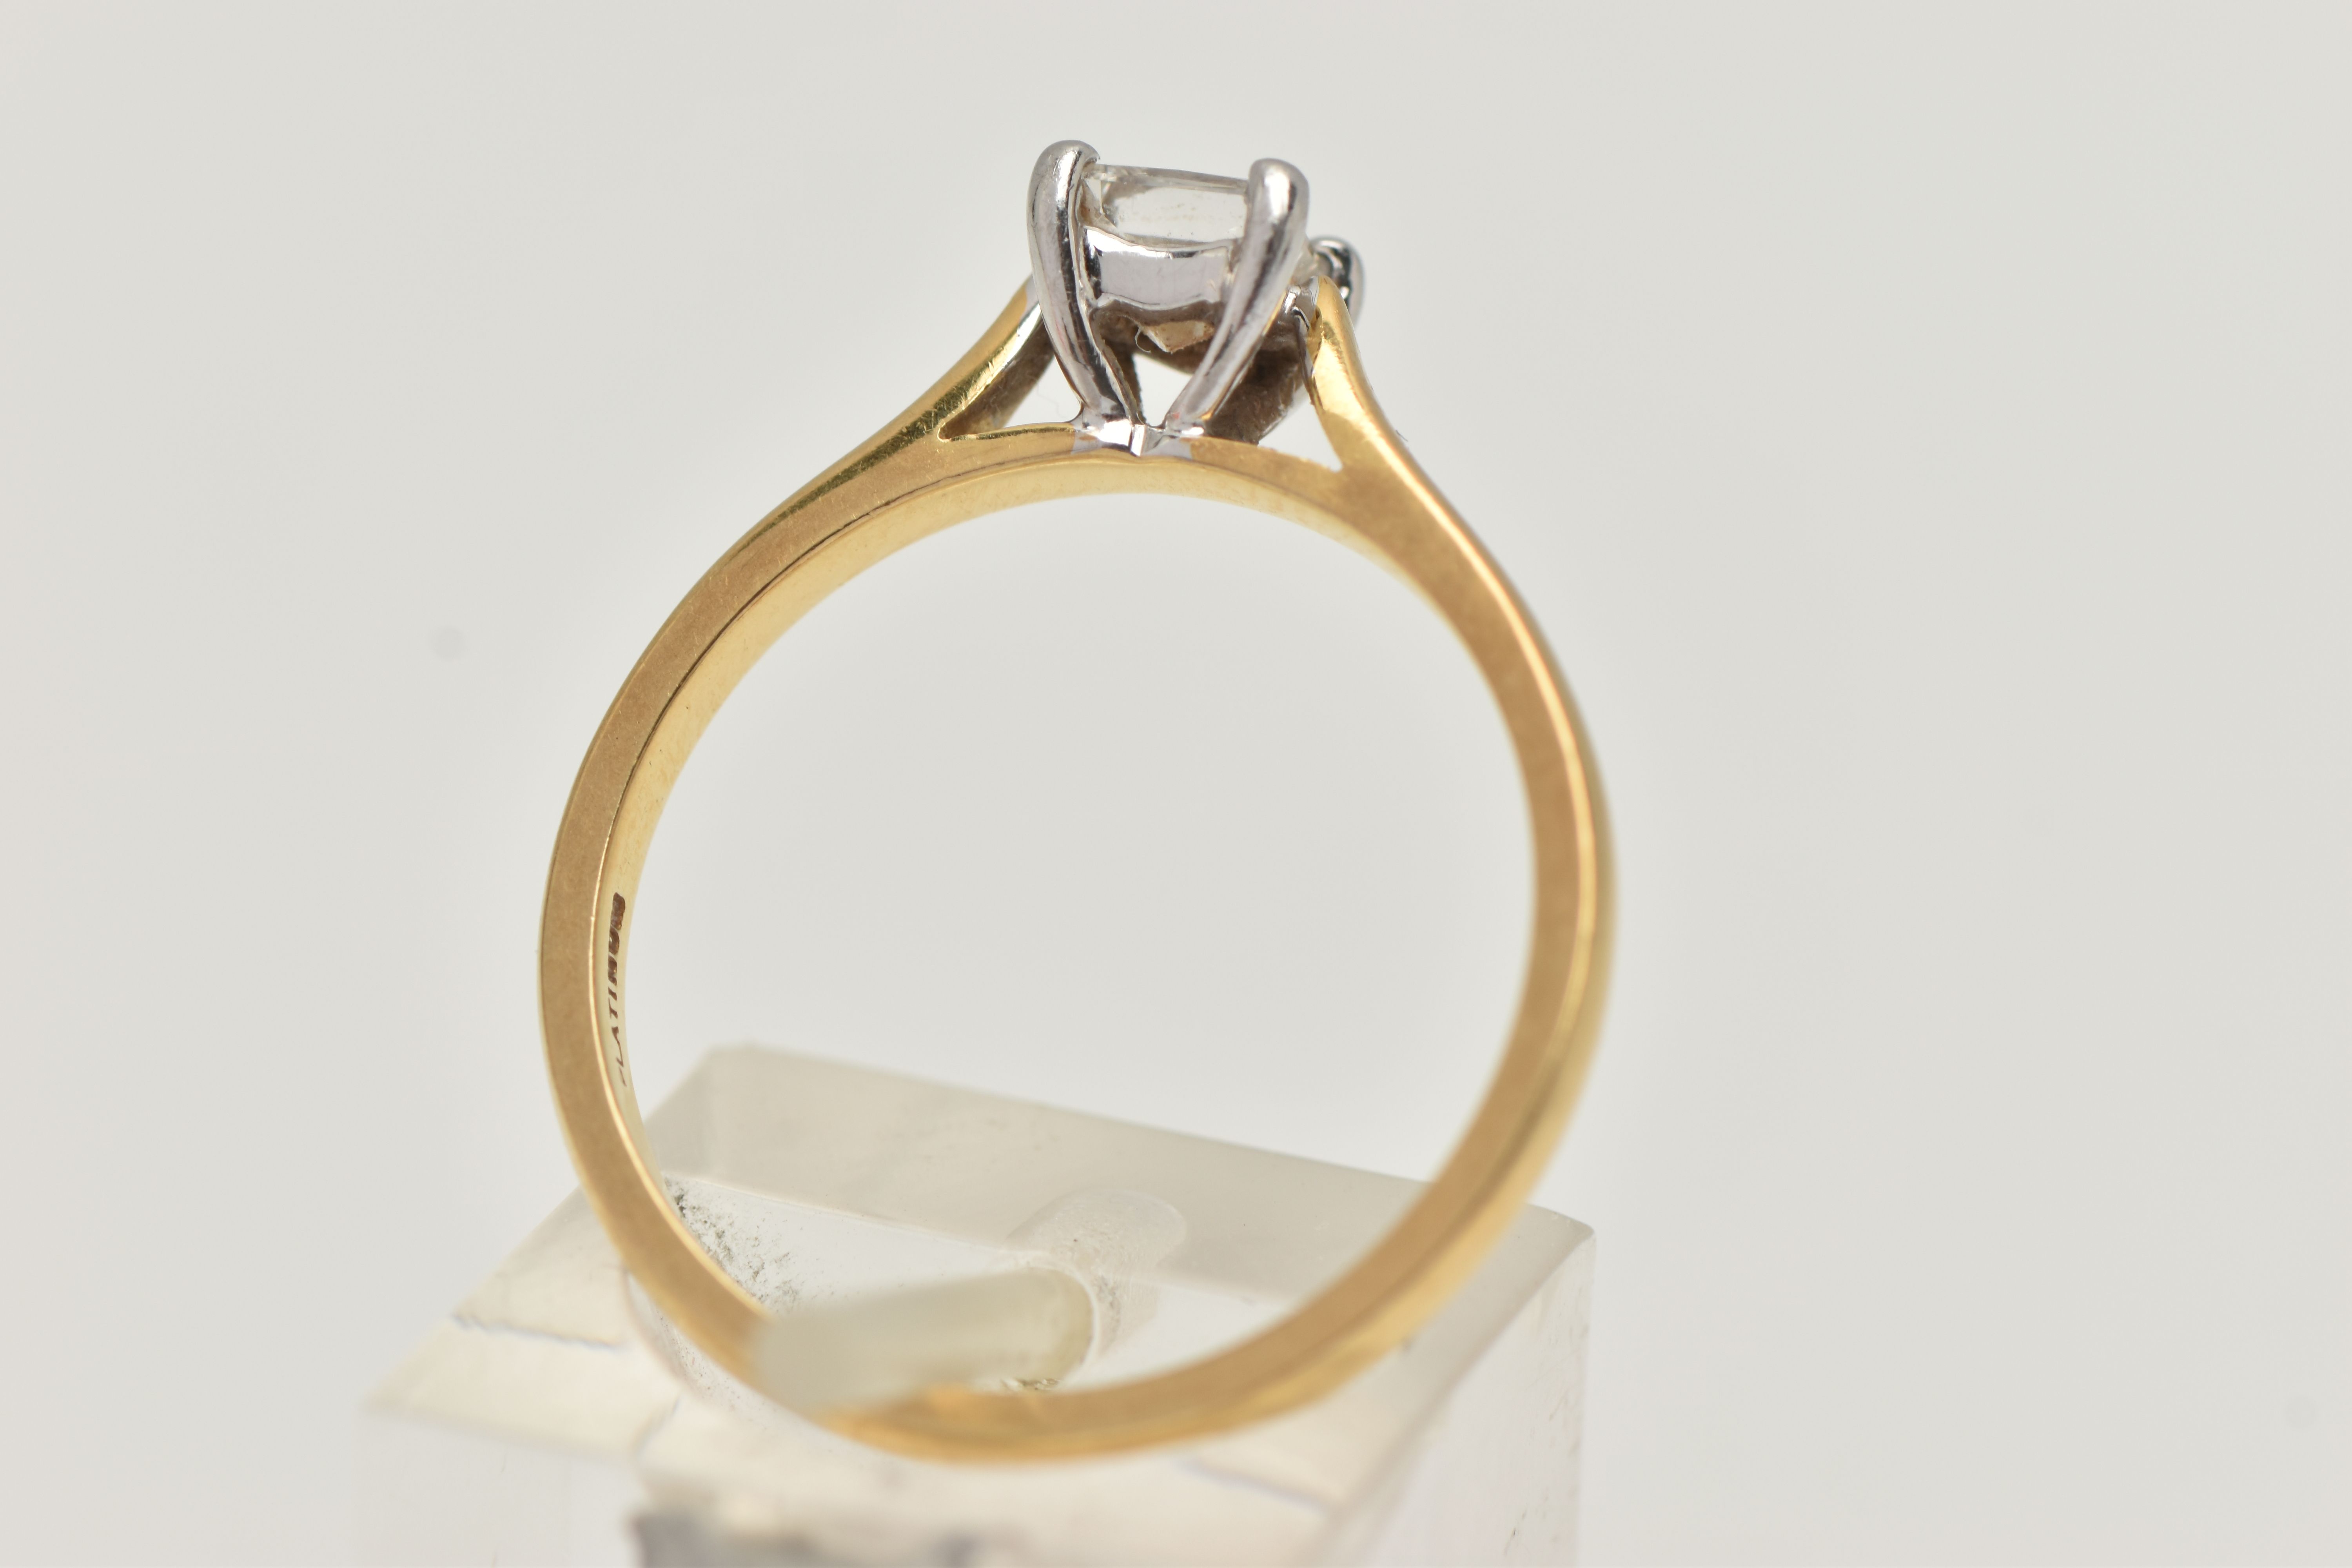 AN 18CT GOLD DIAMOND SINGLE STONE RING, princess cut diamond, with GIA report, laser inscription - Image 3 of 5